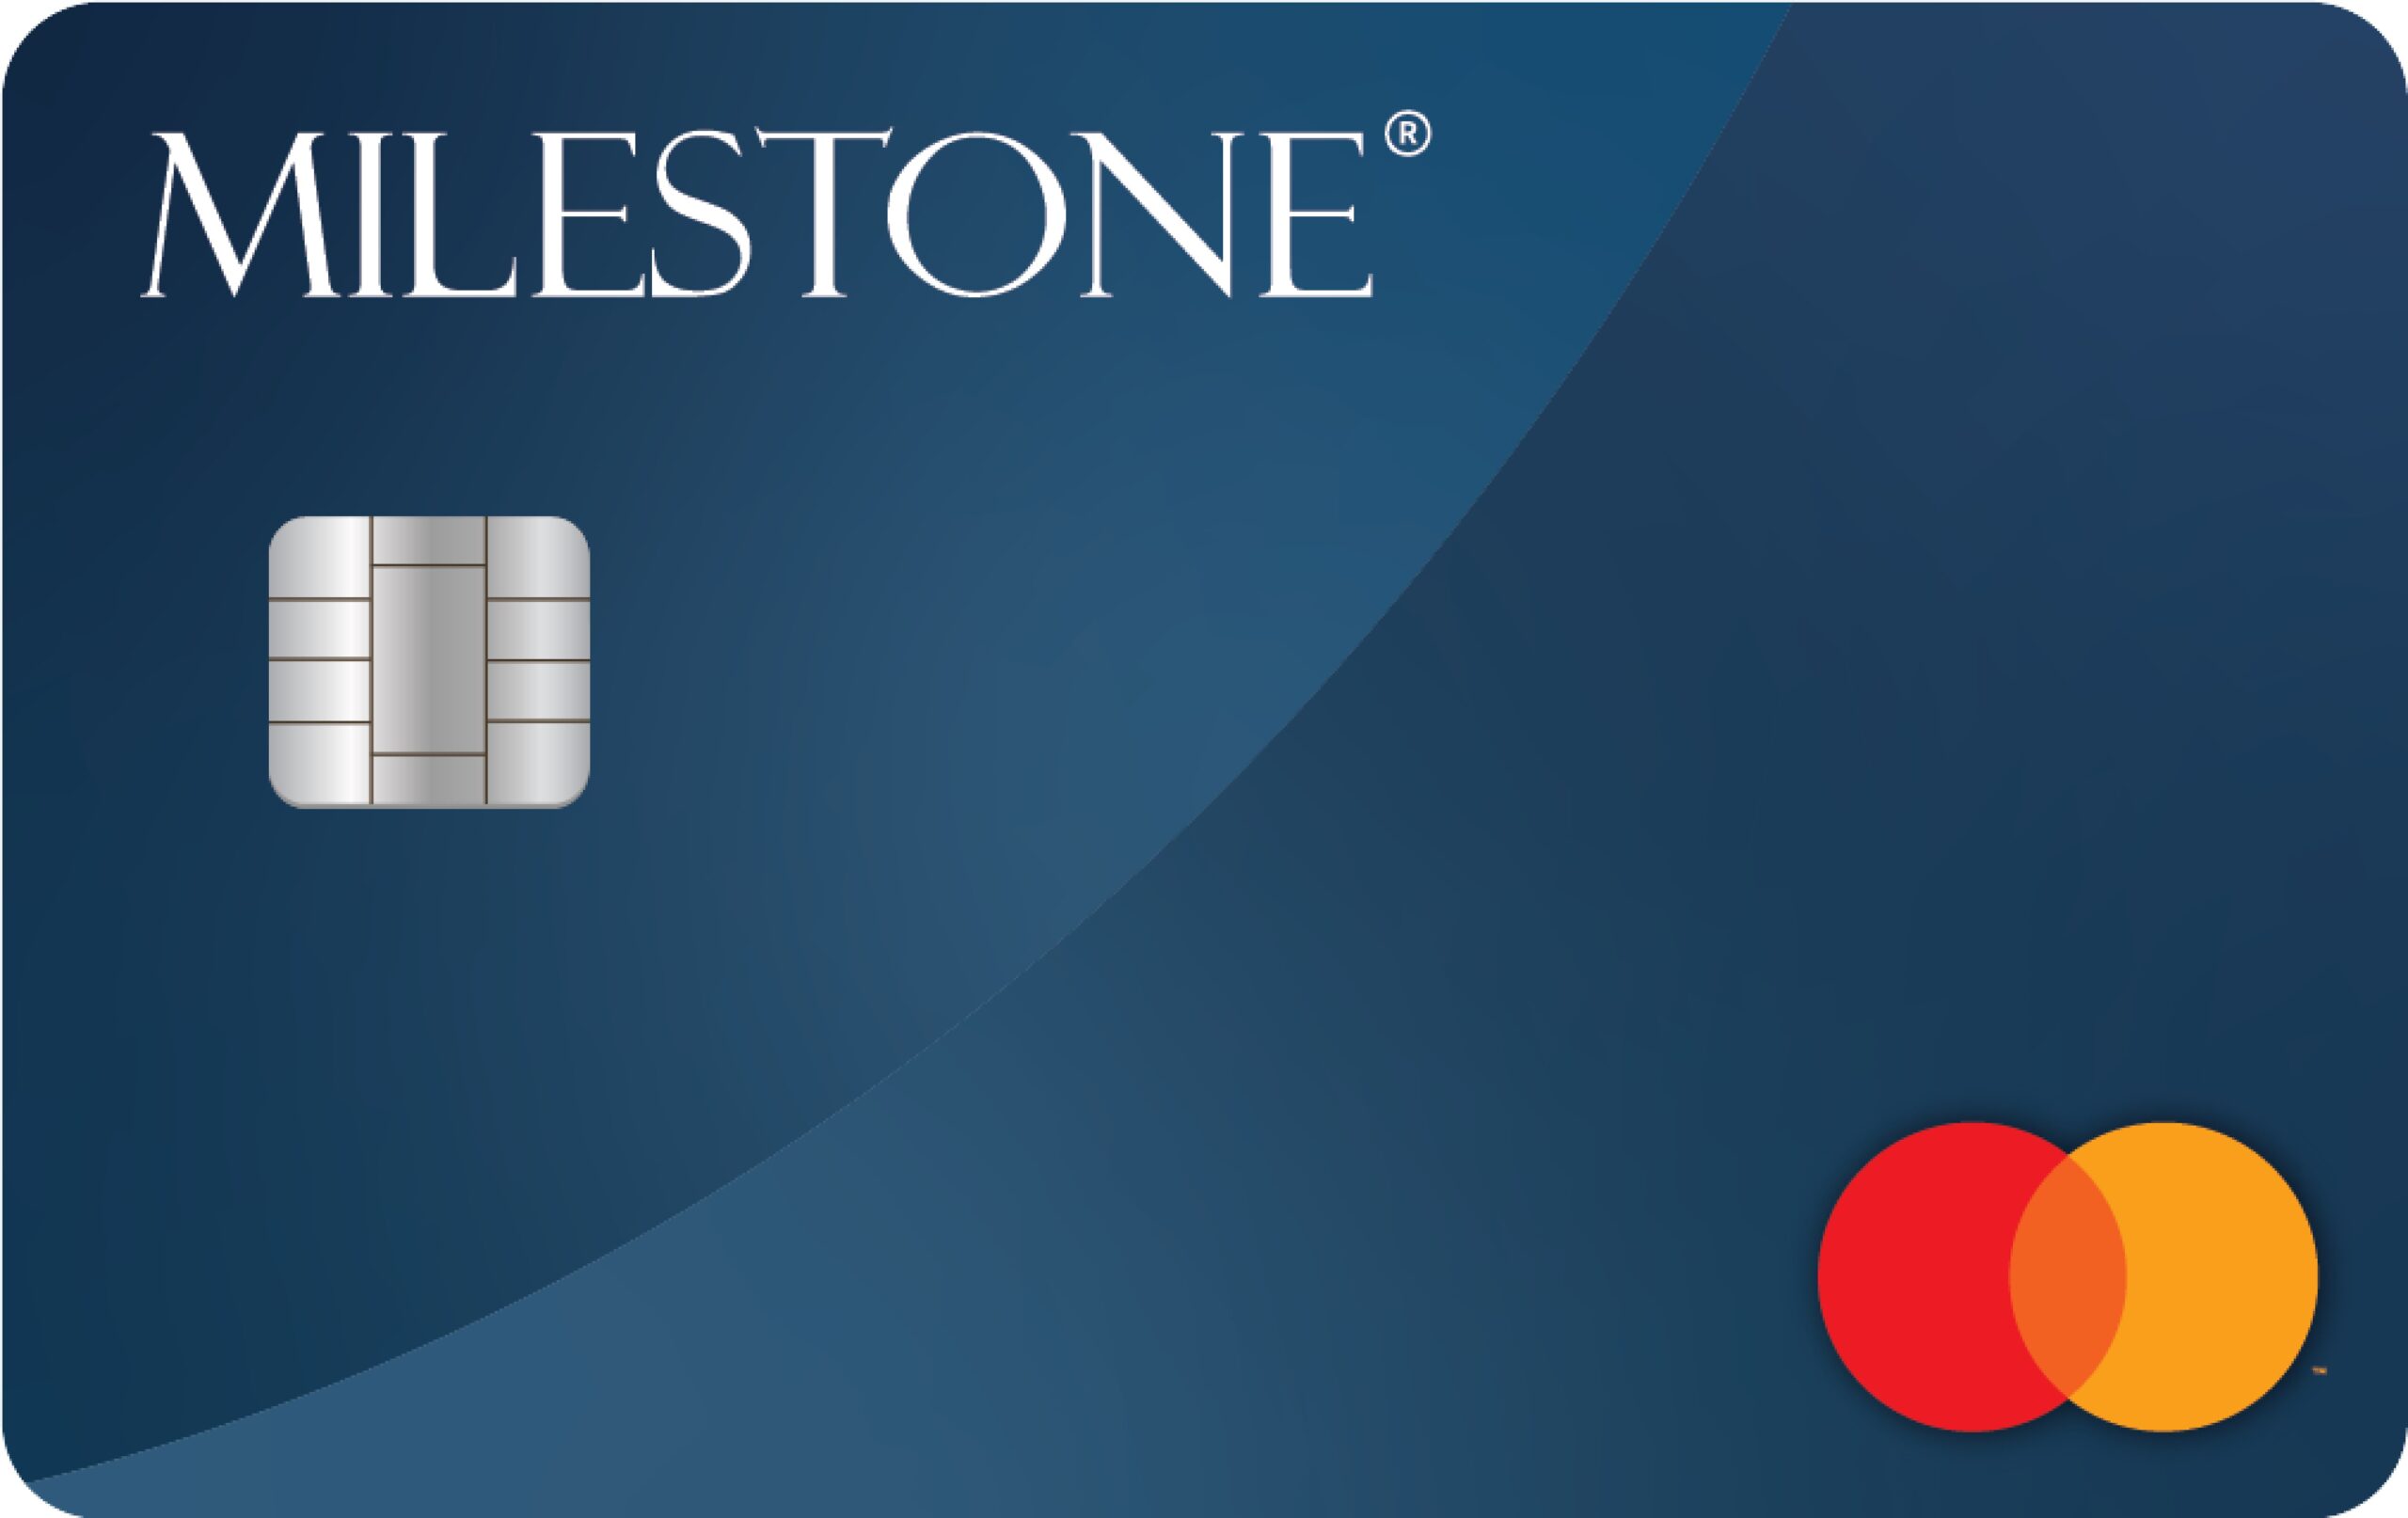 The Milestone Mastercard credit card